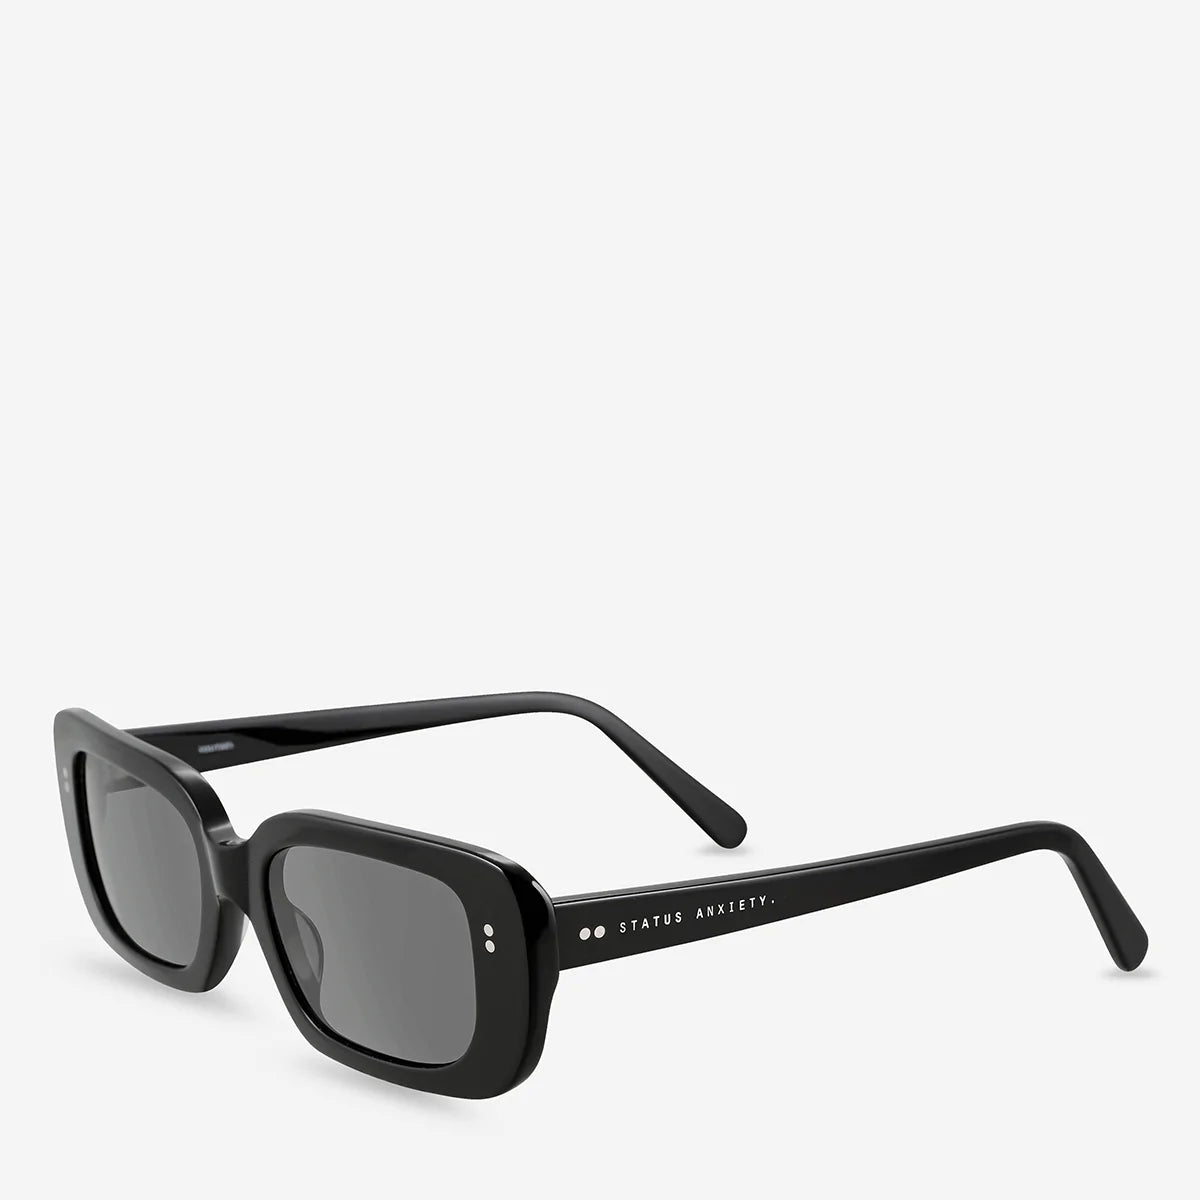 Status Anxiety Sunglasses - Solitary - Black